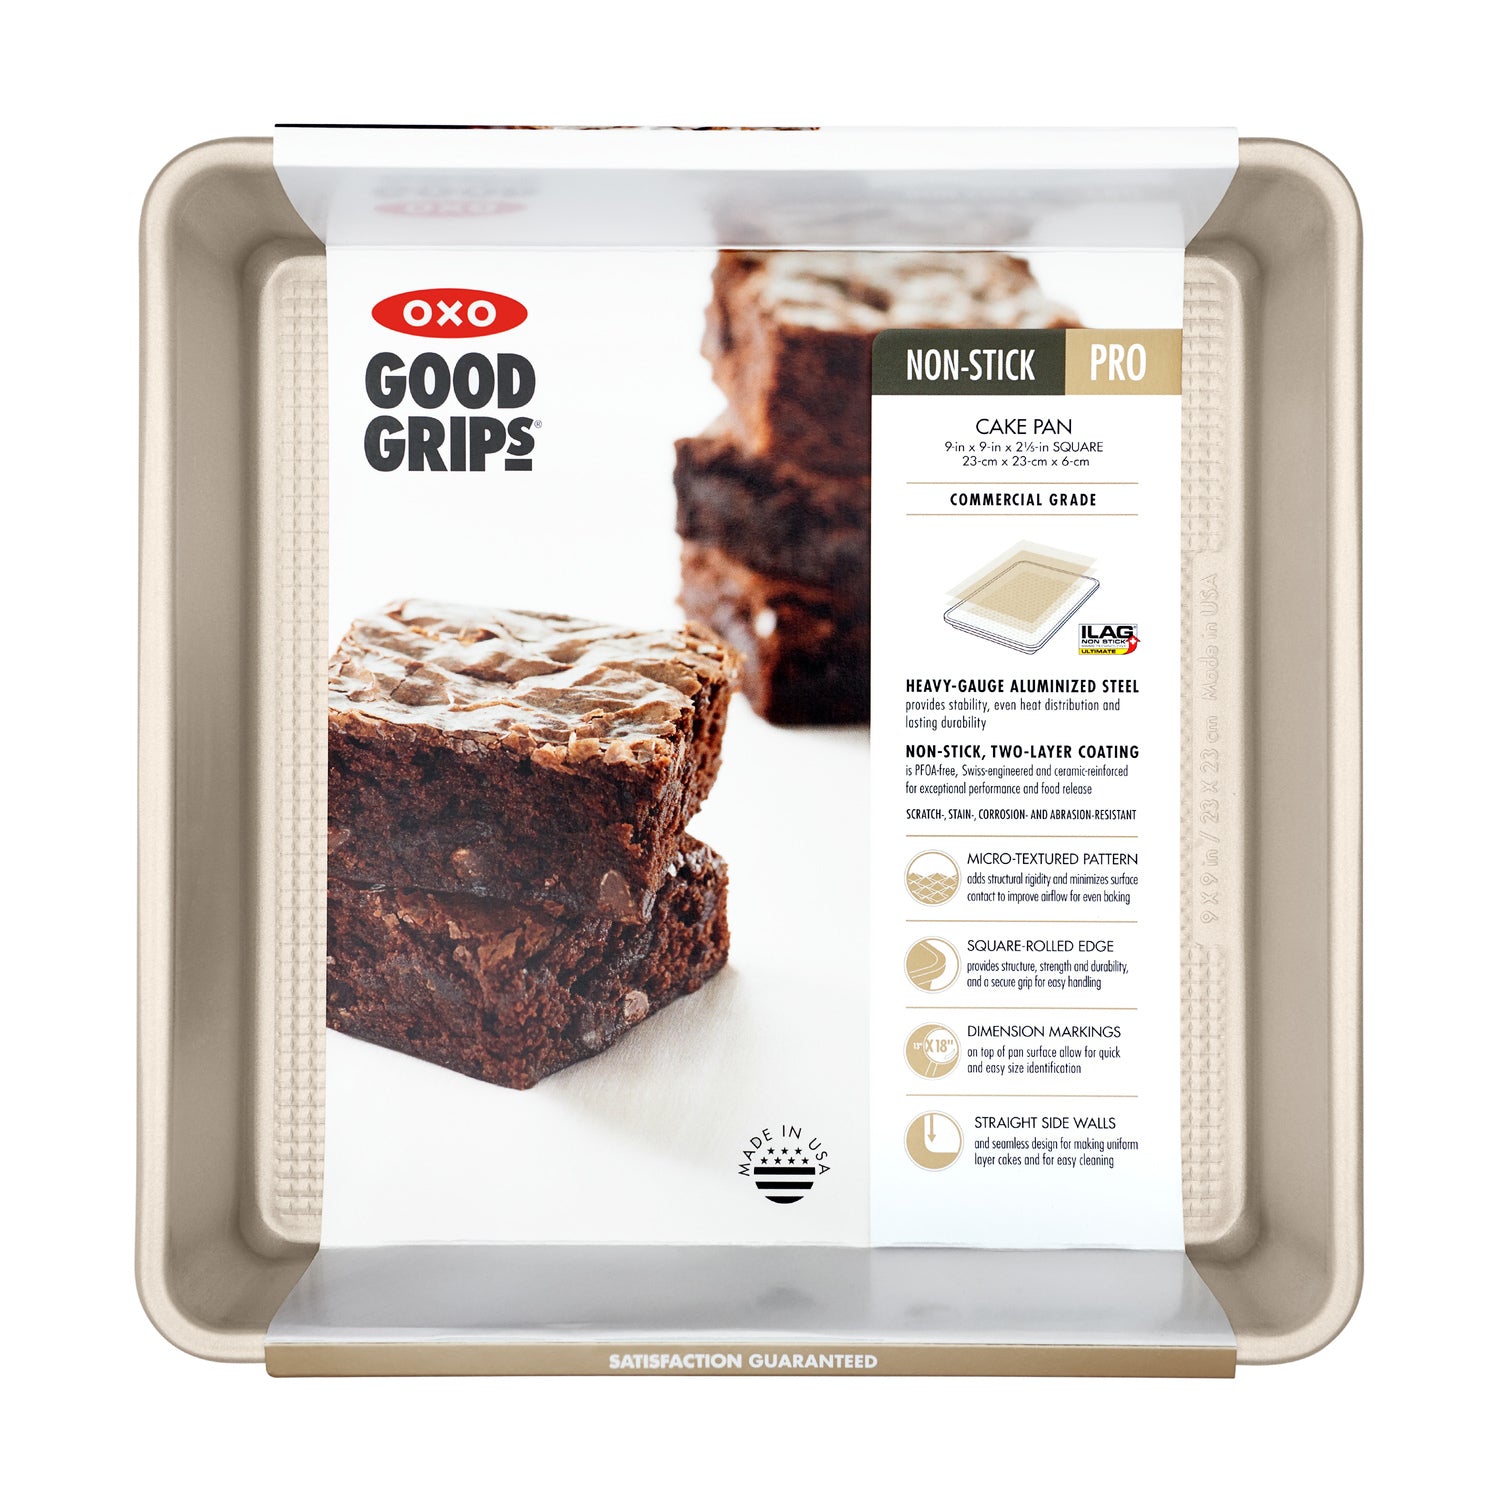 CAKE PAN non- STICK OXO Good Grips Non-Stick Pro Cake Pan 9 x 13 Inch  REVIEW 